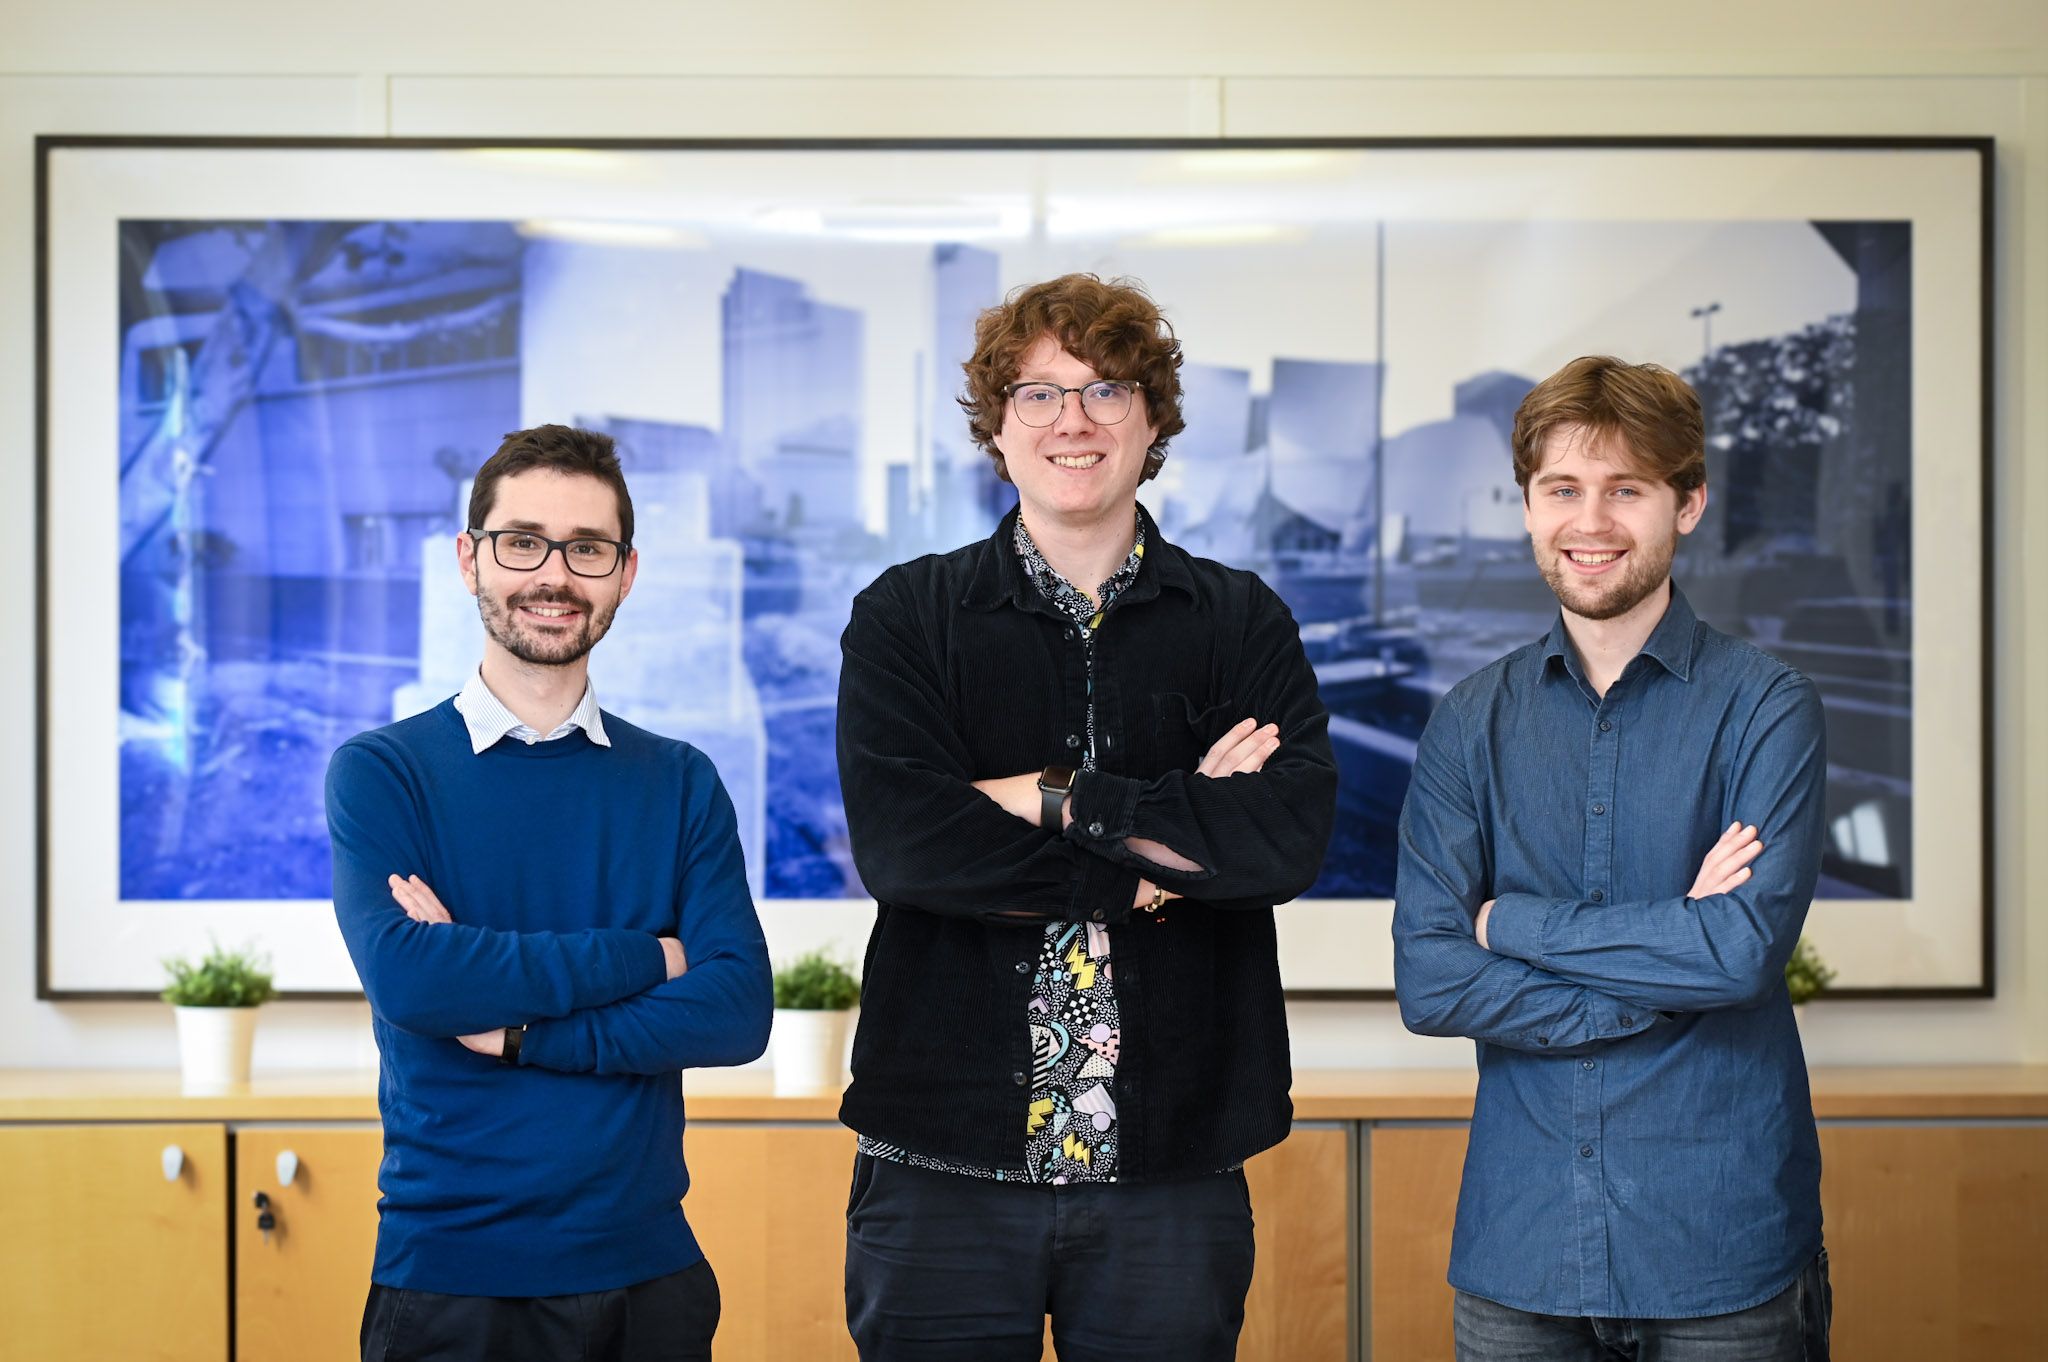 The Adaptive ML founding team: Baptiste Pannier, Julien Launay, and Daniel Hesslow.